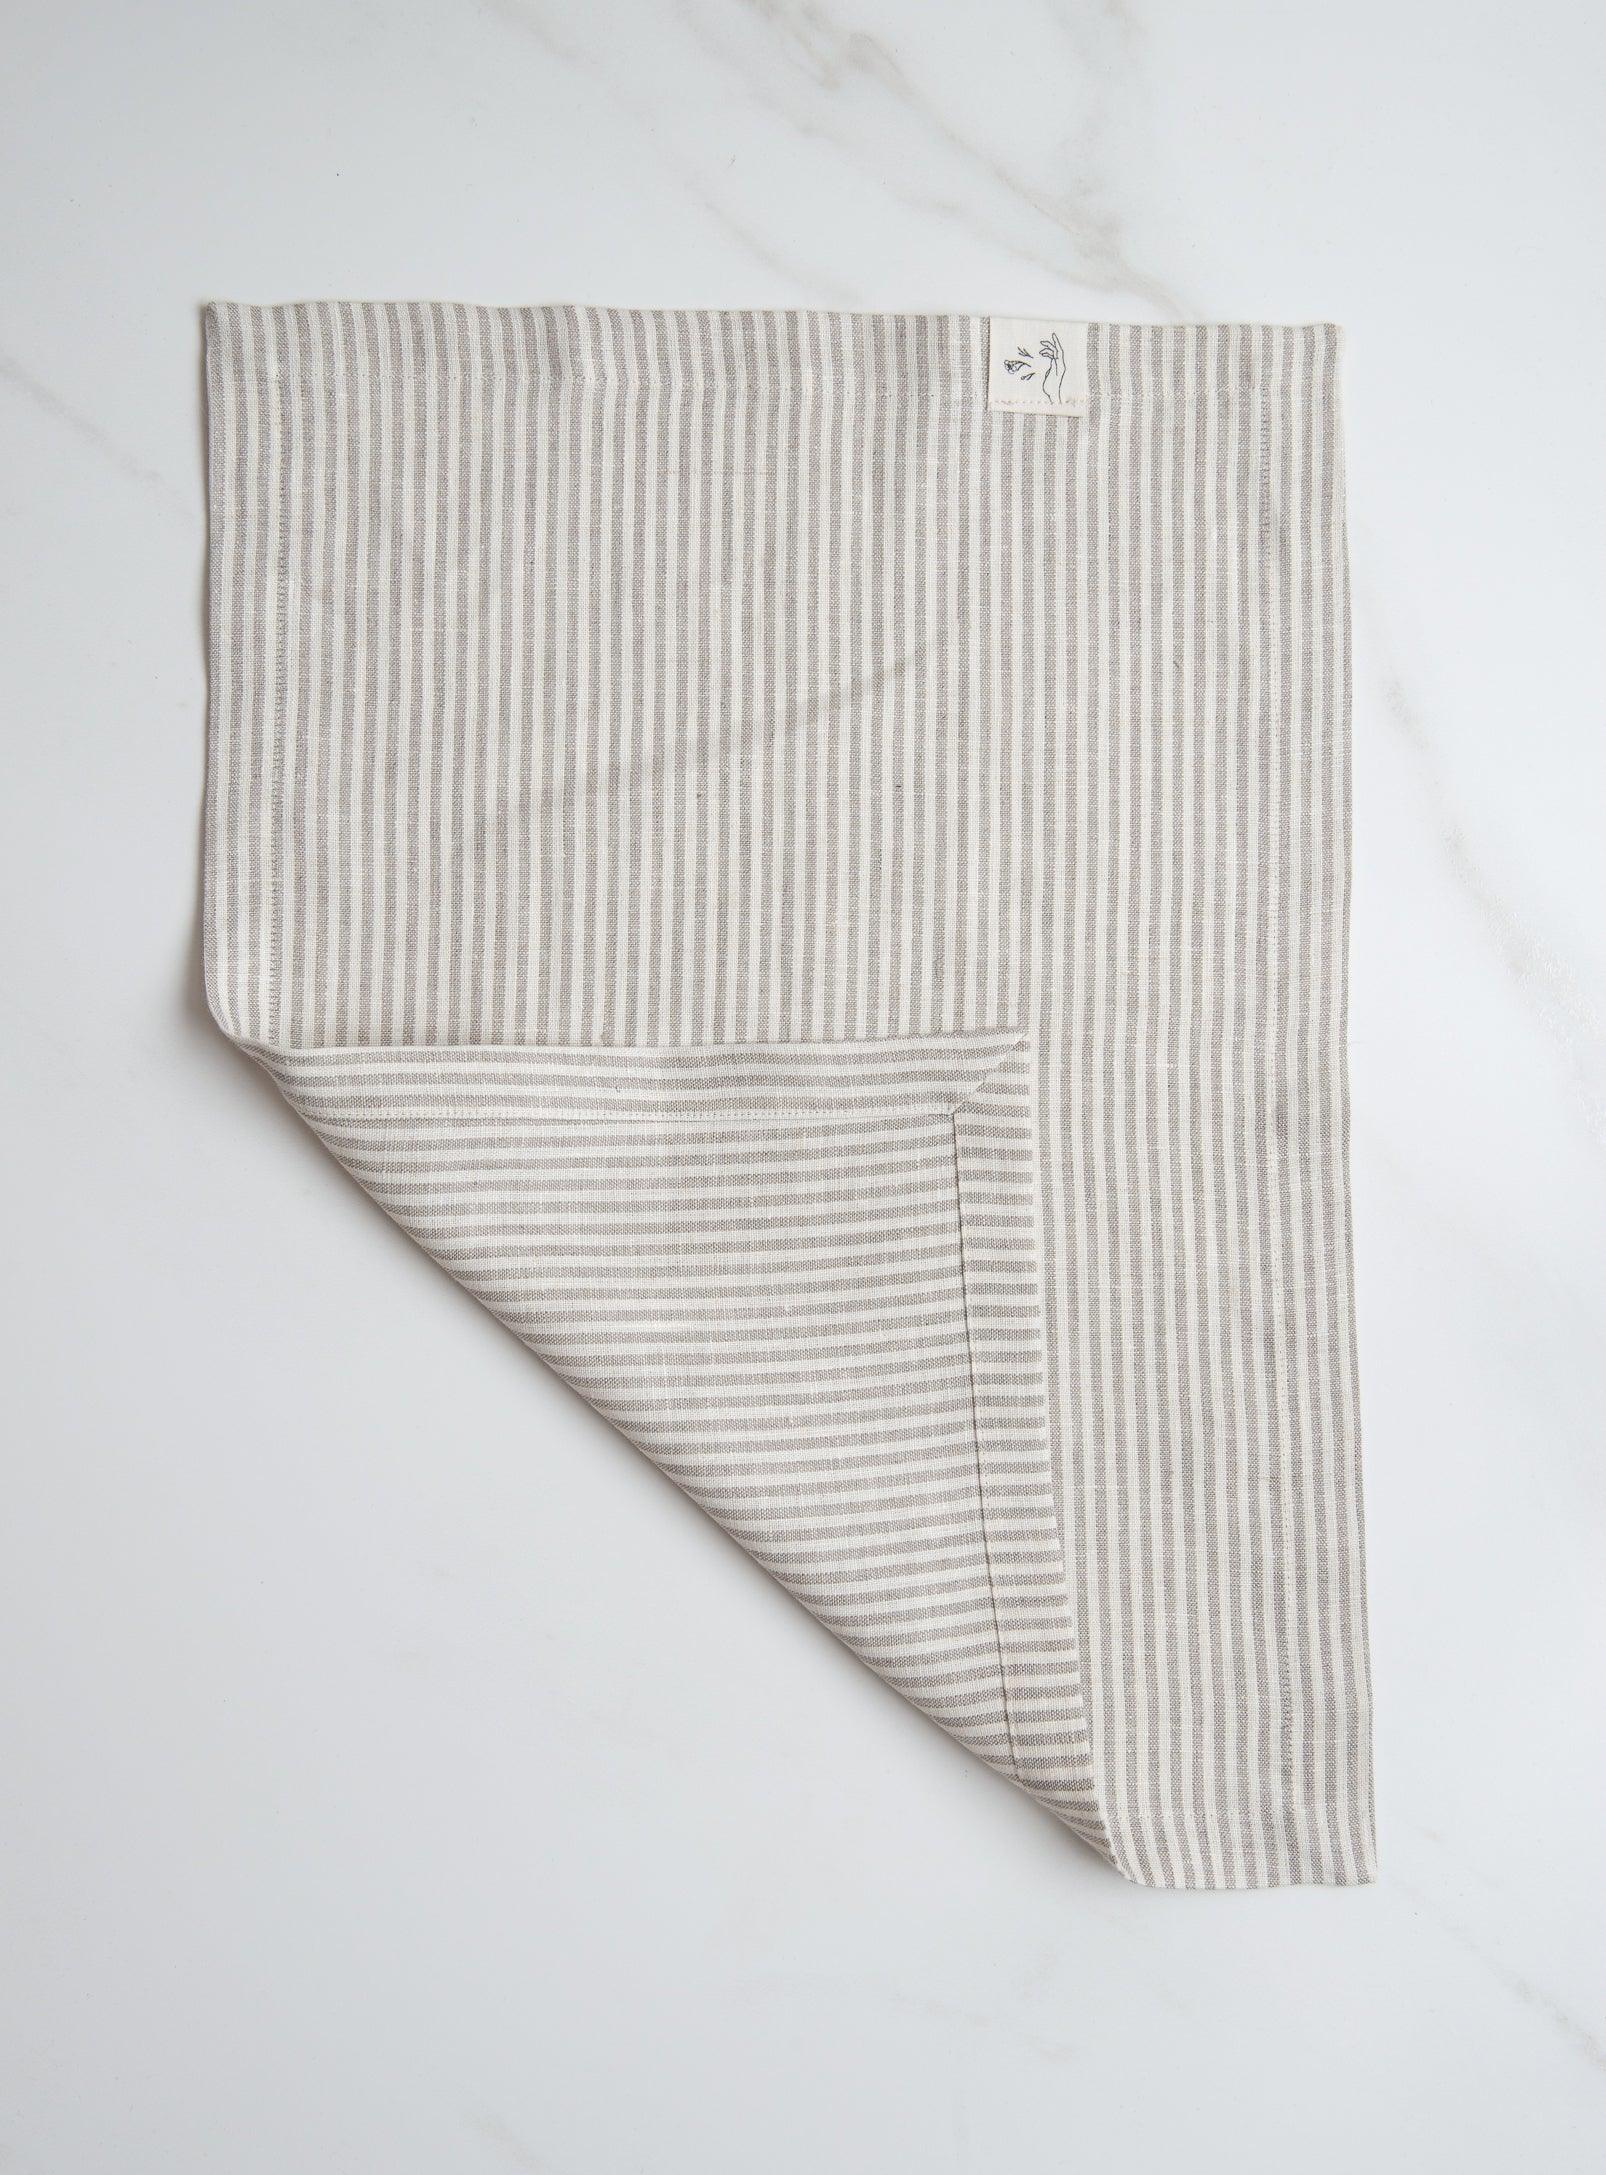 Linen Placemat - Stripes - Confetti Mill